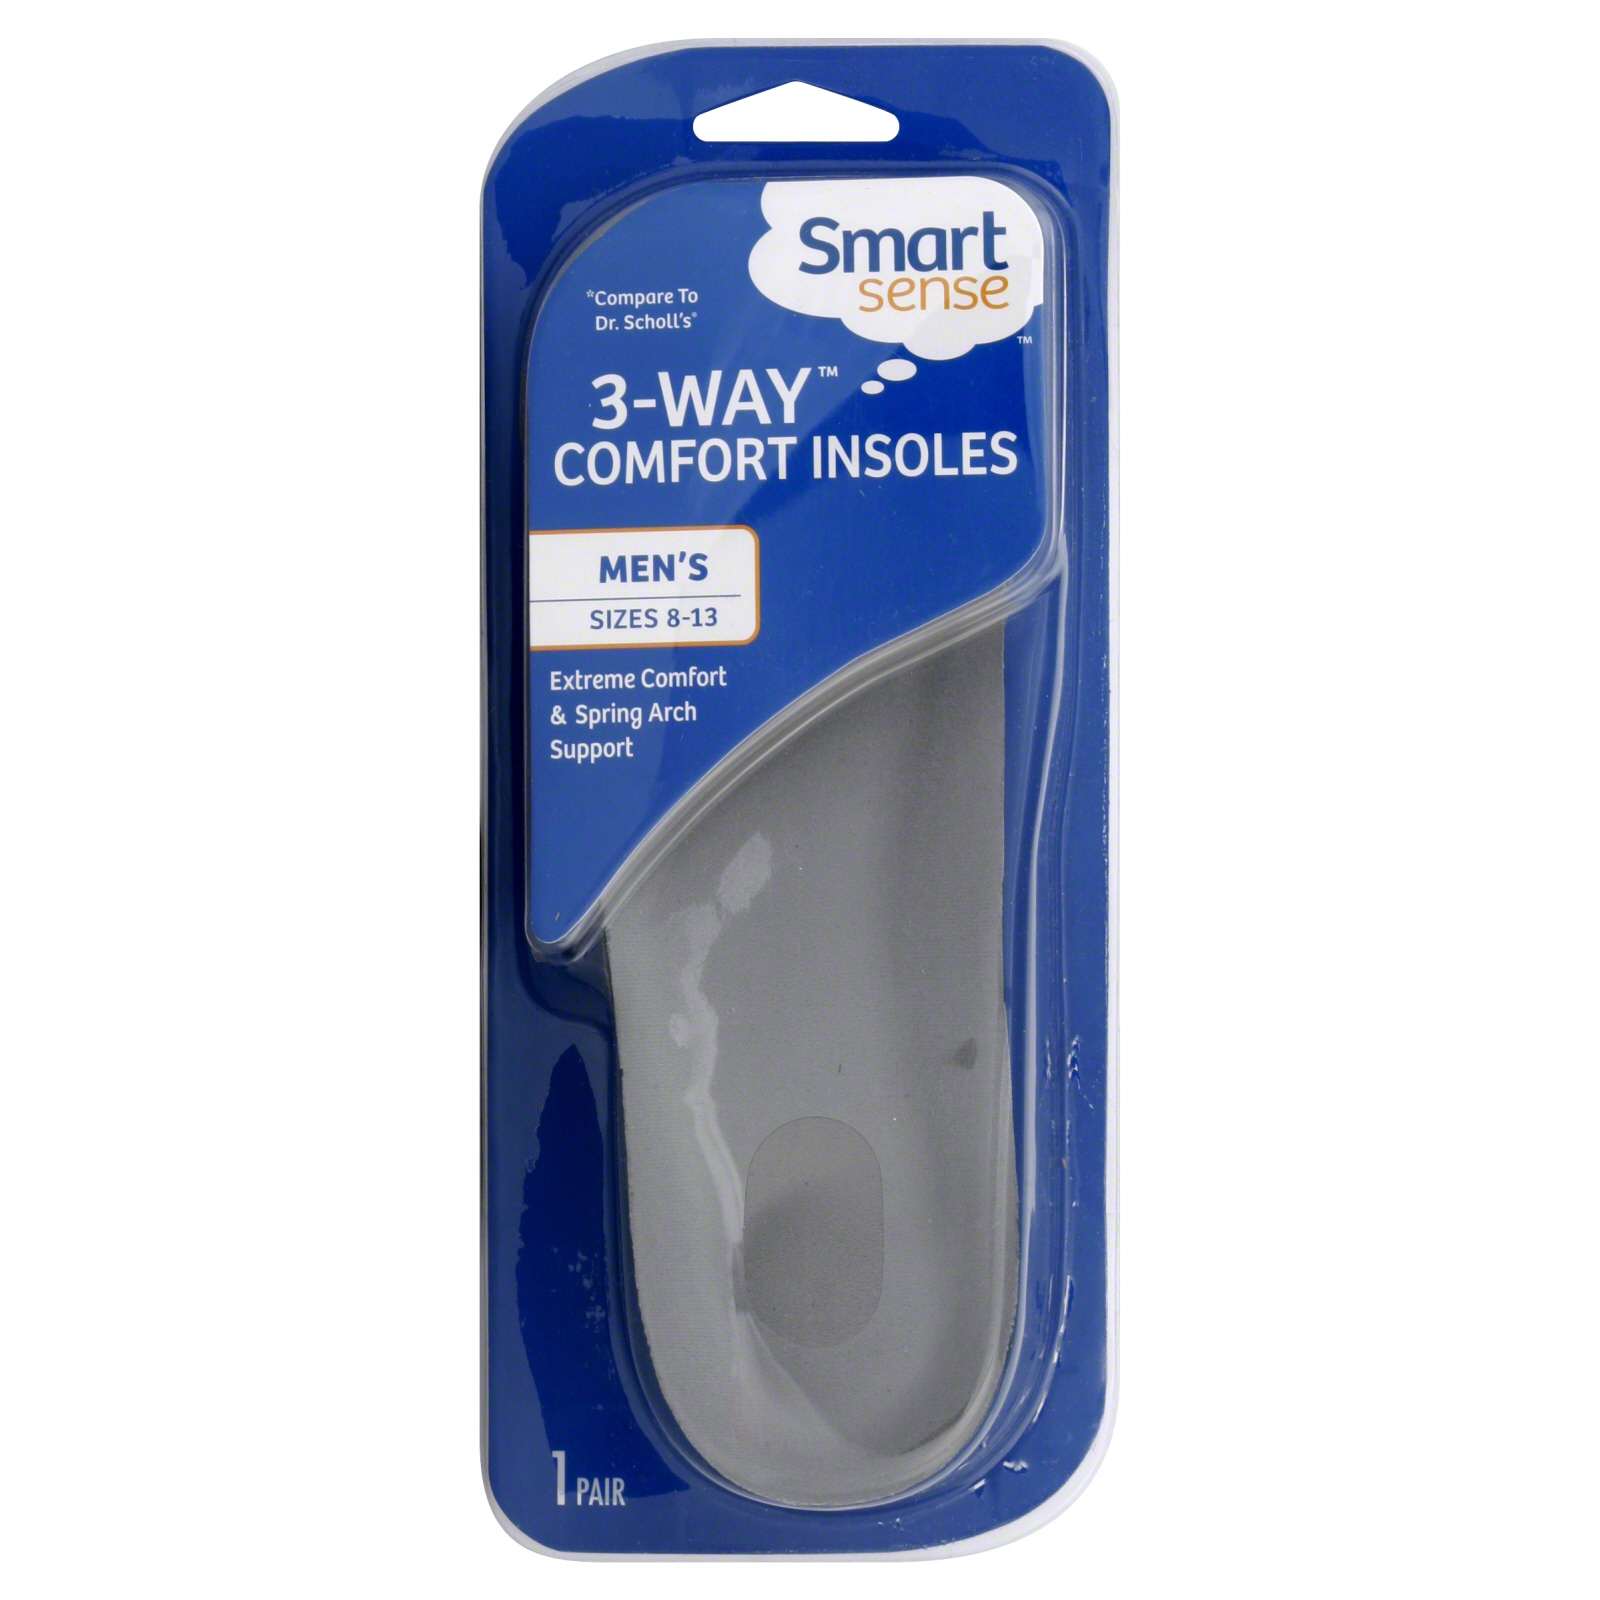 Smart Sense Insoles, 3-Way Comfort, Men's, Sizes 8-13 1 pair